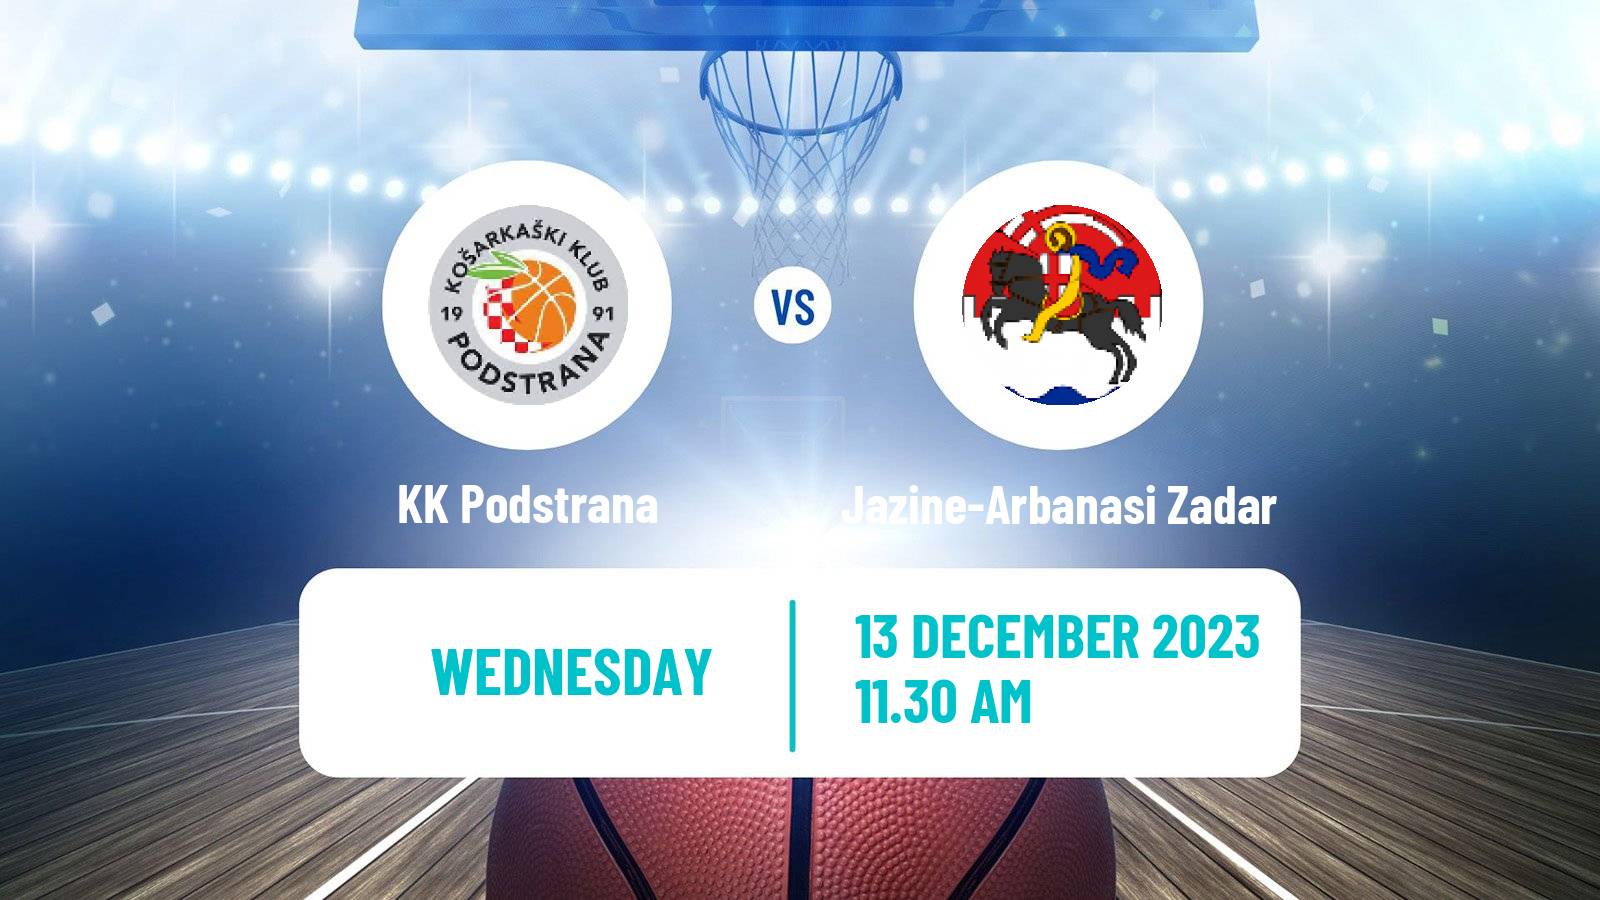 Basketball Croatian Prva Liga Basketball Podstrana - Jazine-Arbanasi Zadar